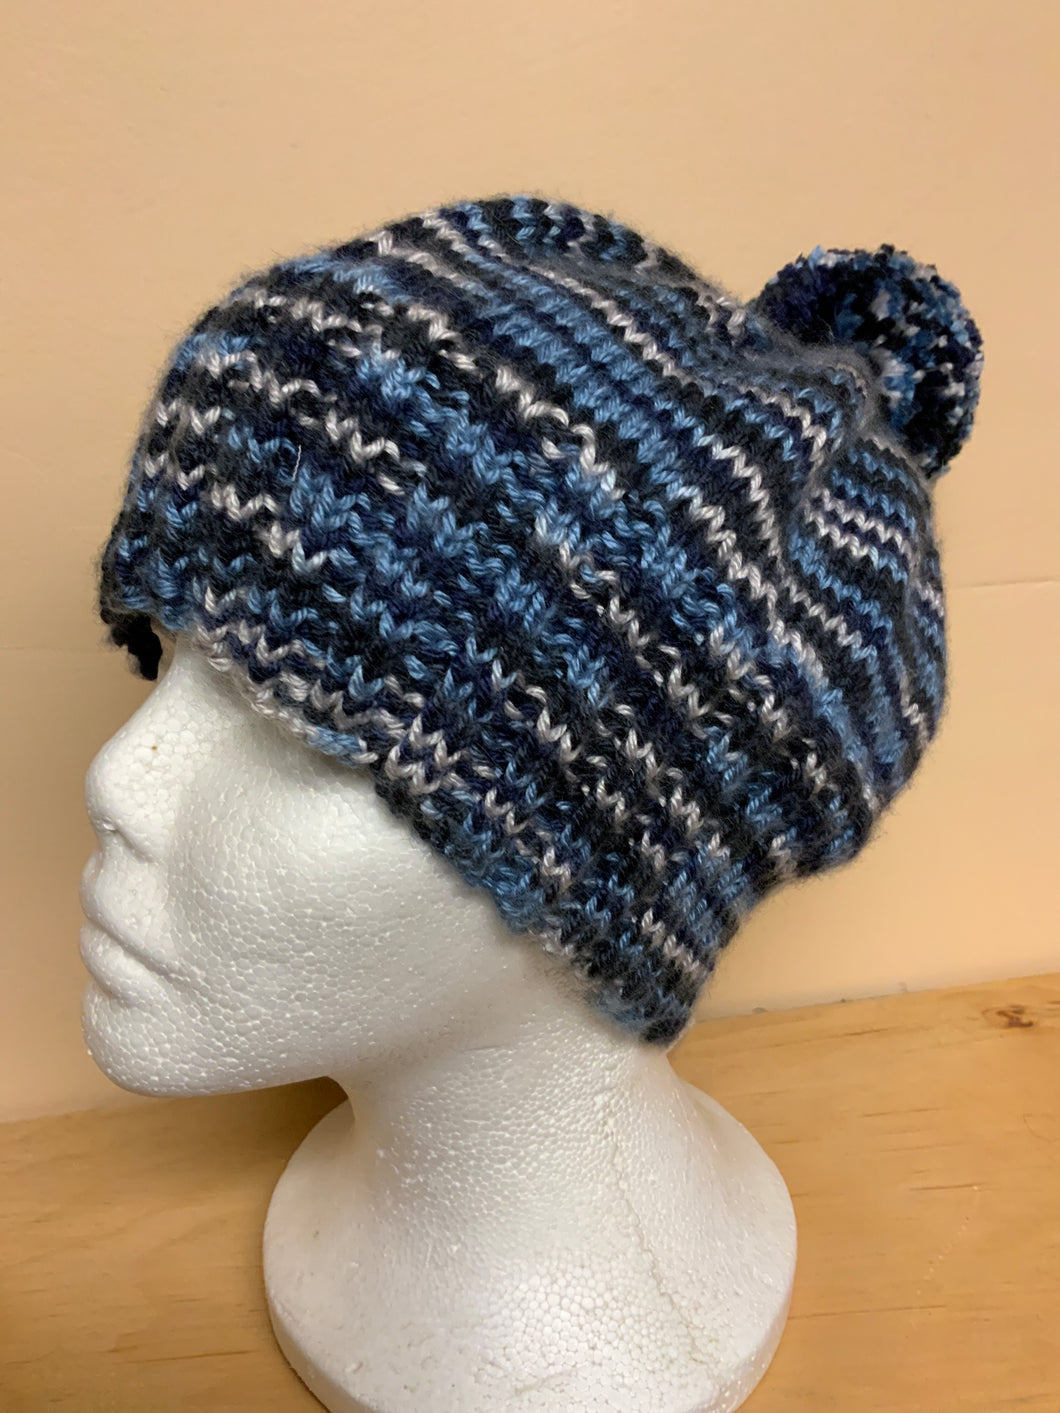 Hand-knit blue hat